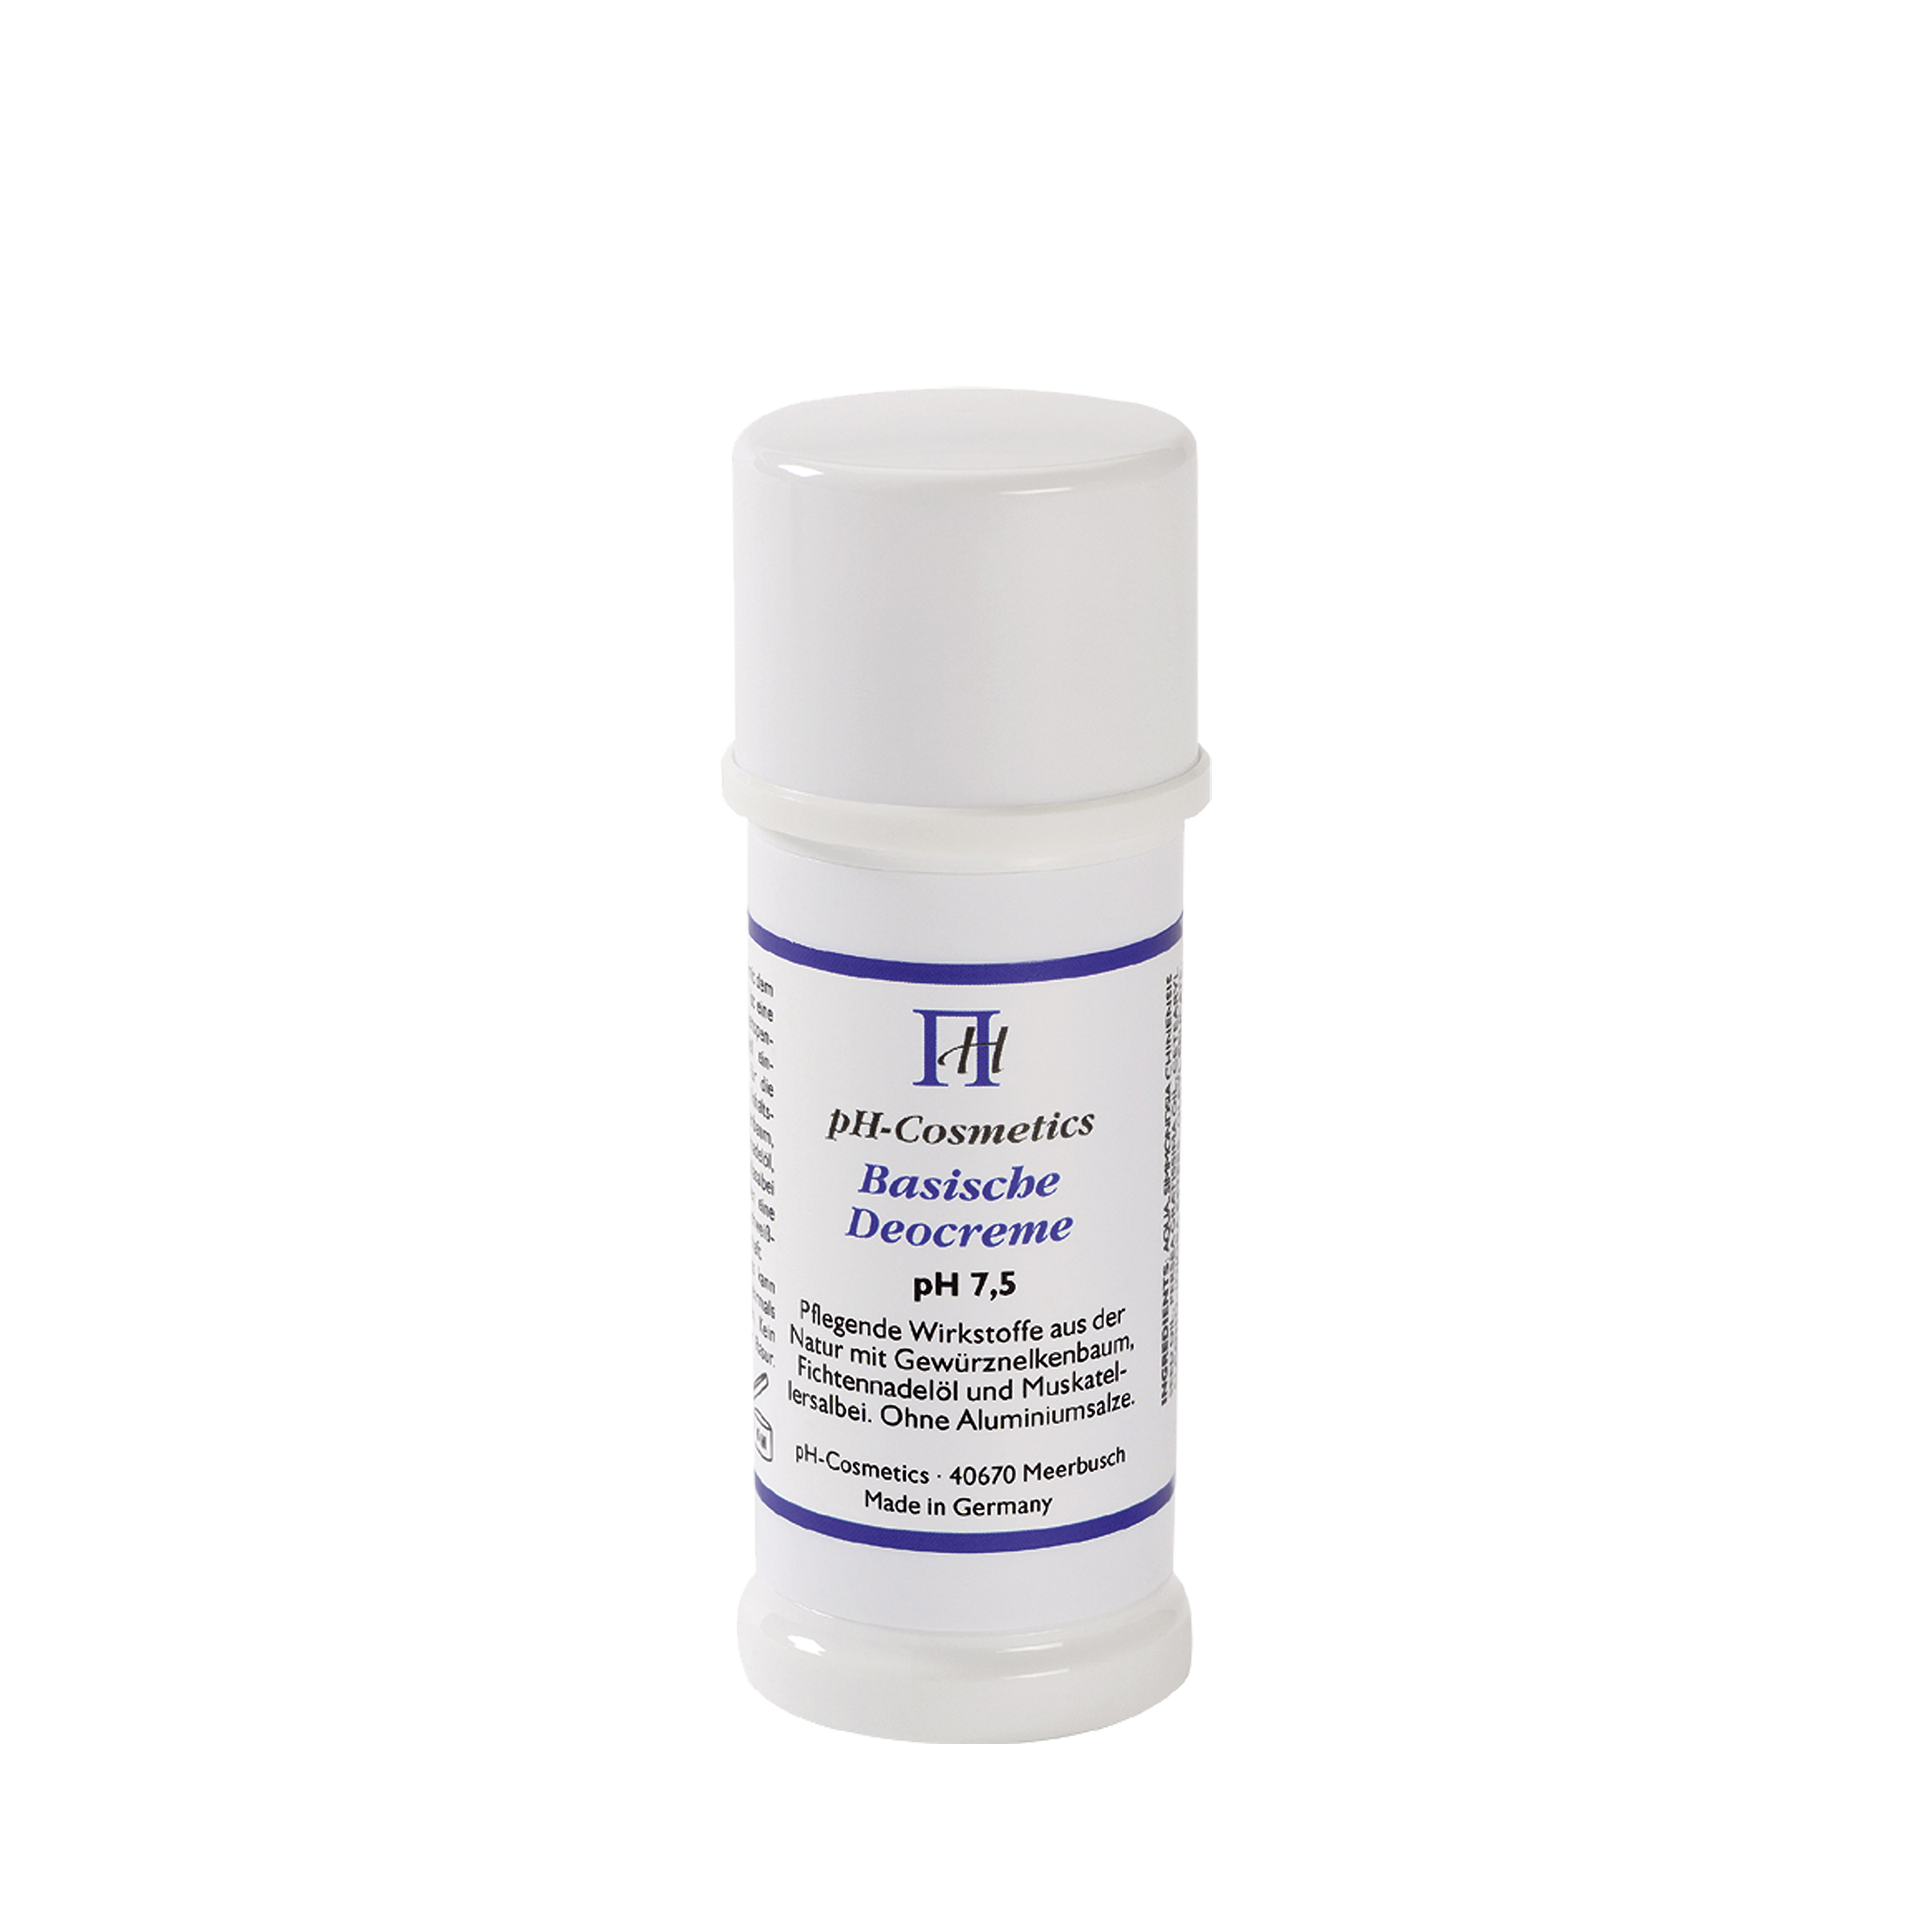 pH-Cosmetics Basische Deocreme, pH 7.5, 40 ml